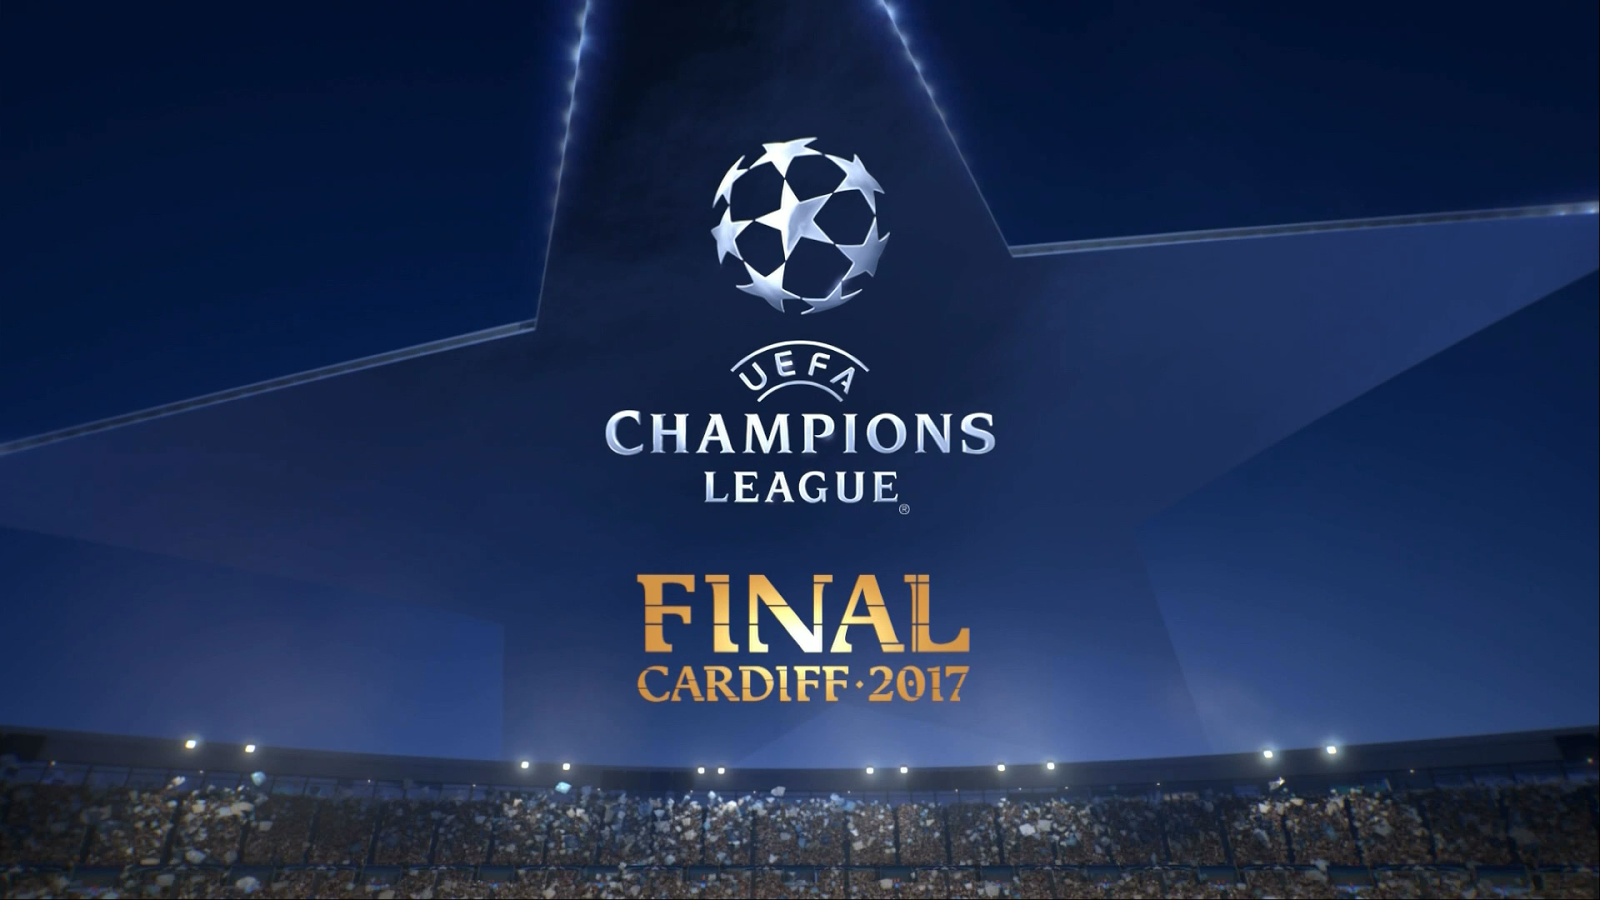 Uefa finals. UEFA Champions 2016 2017 финал. Финал Лиги чемпионов УЕФА 2017. Лига чемпионов фон. Фон ЛЧ финал.